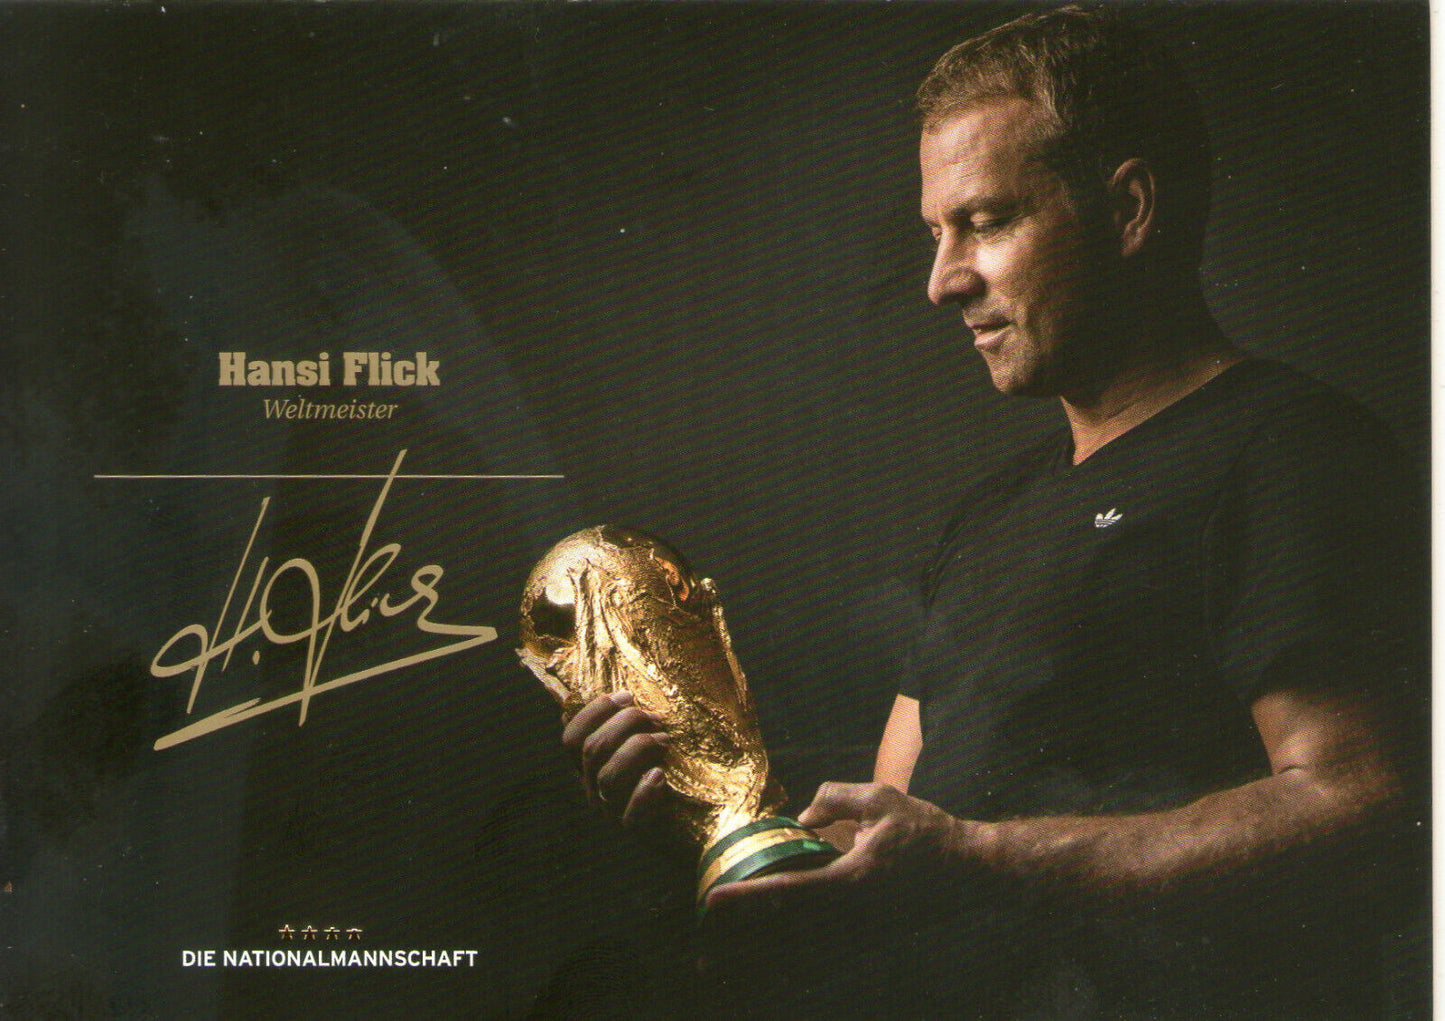 Limited, Limitierte Edition DFB Autogrammkarte! Hansi Flick!! RAR!!, Gold